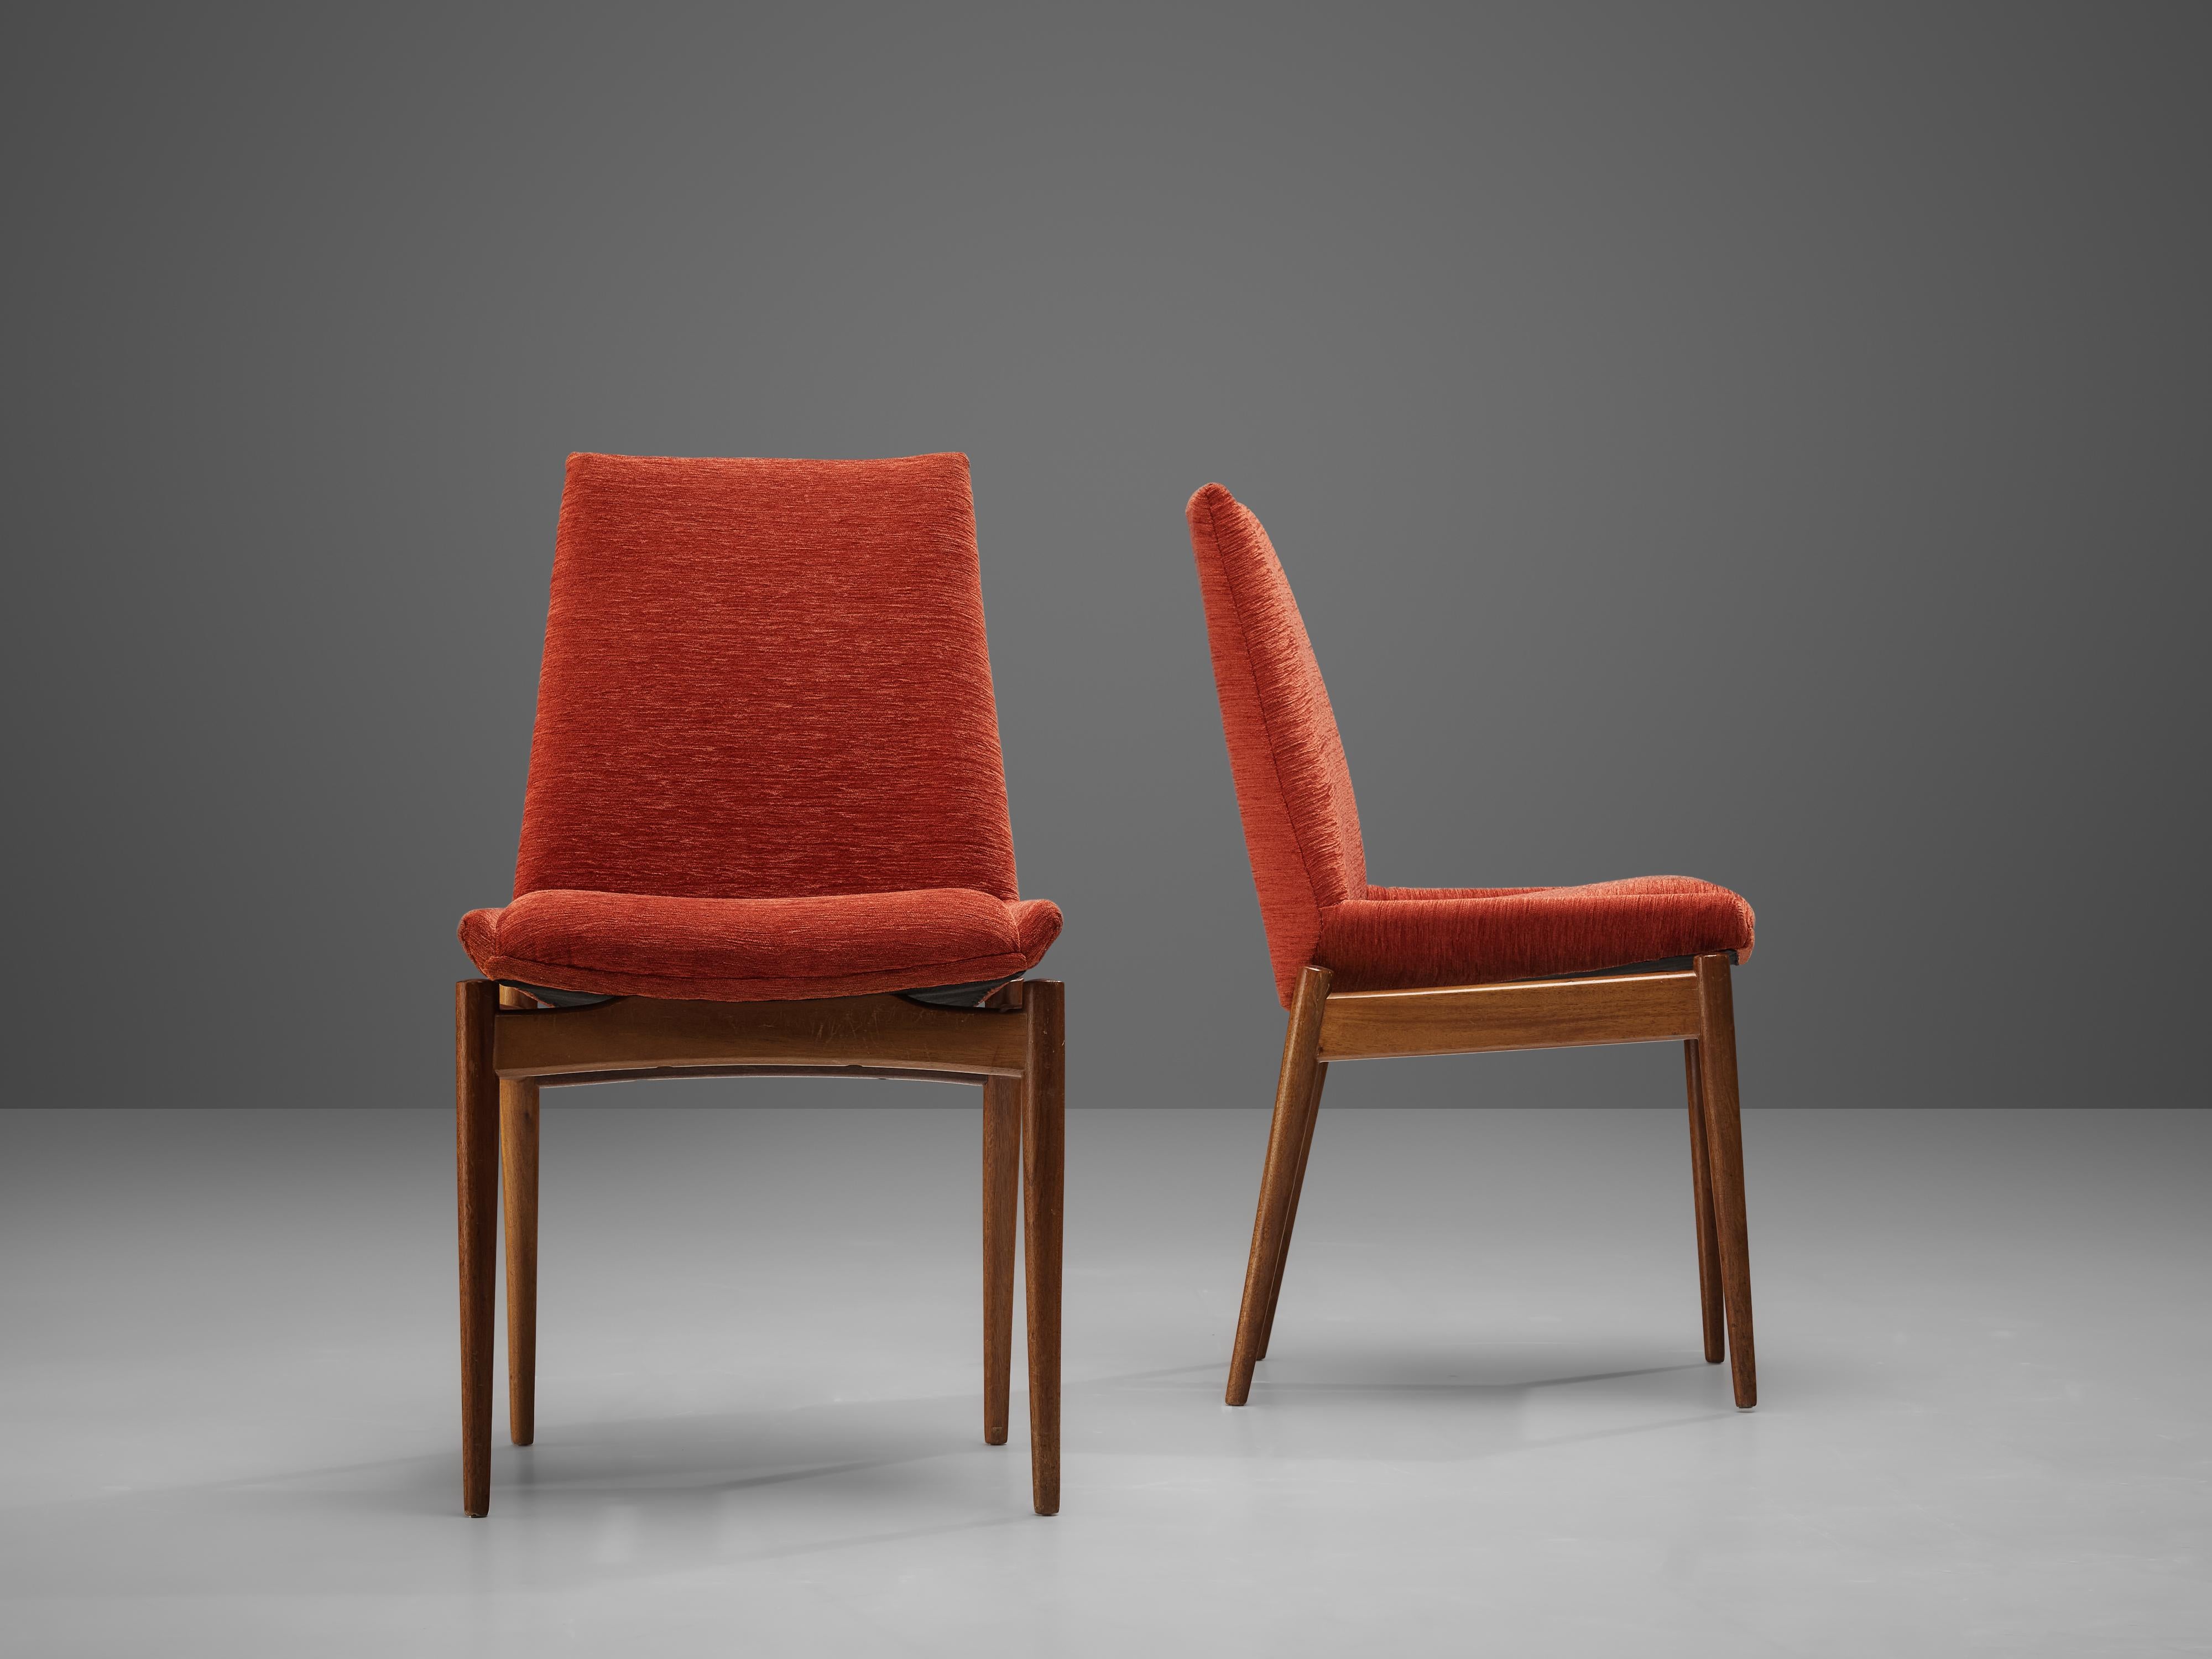 Scandinavian Modern Scandinavian Dining Chairs in Teak and Red/Orange Cord Upholstery